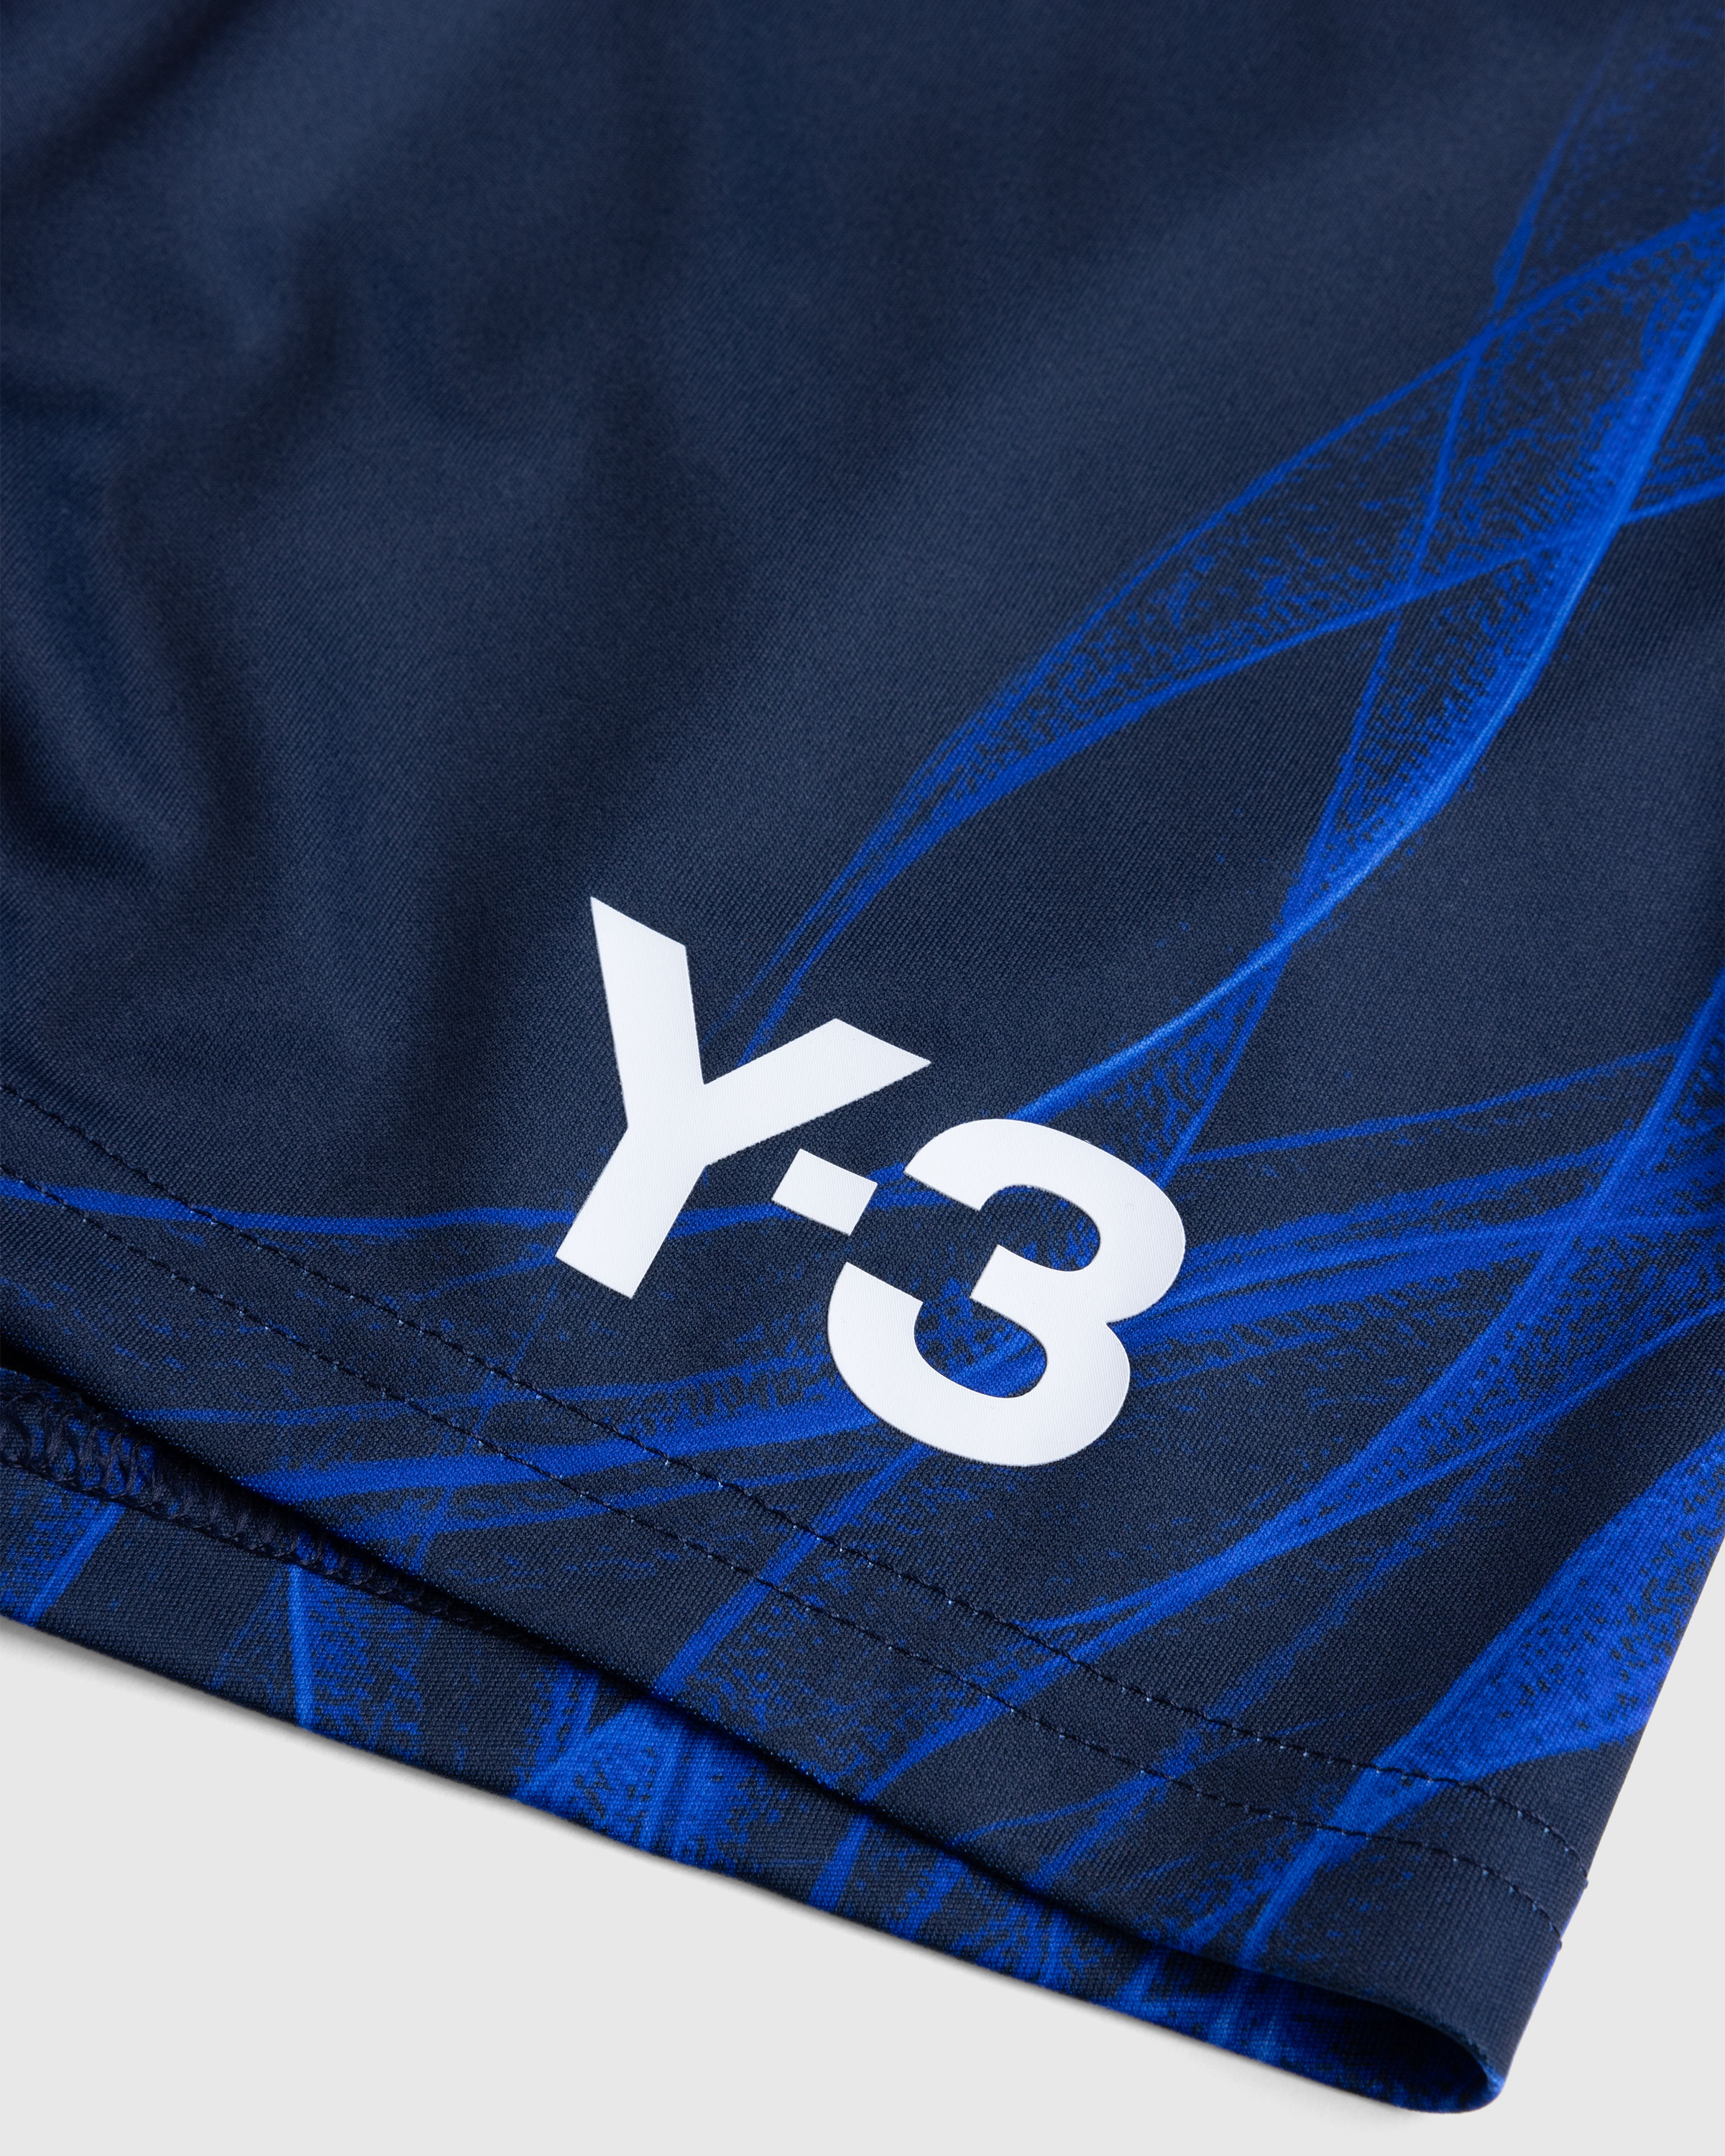 Y-3 – JFA Home Shorts Blue - Active Shorts - Blue - Image 4